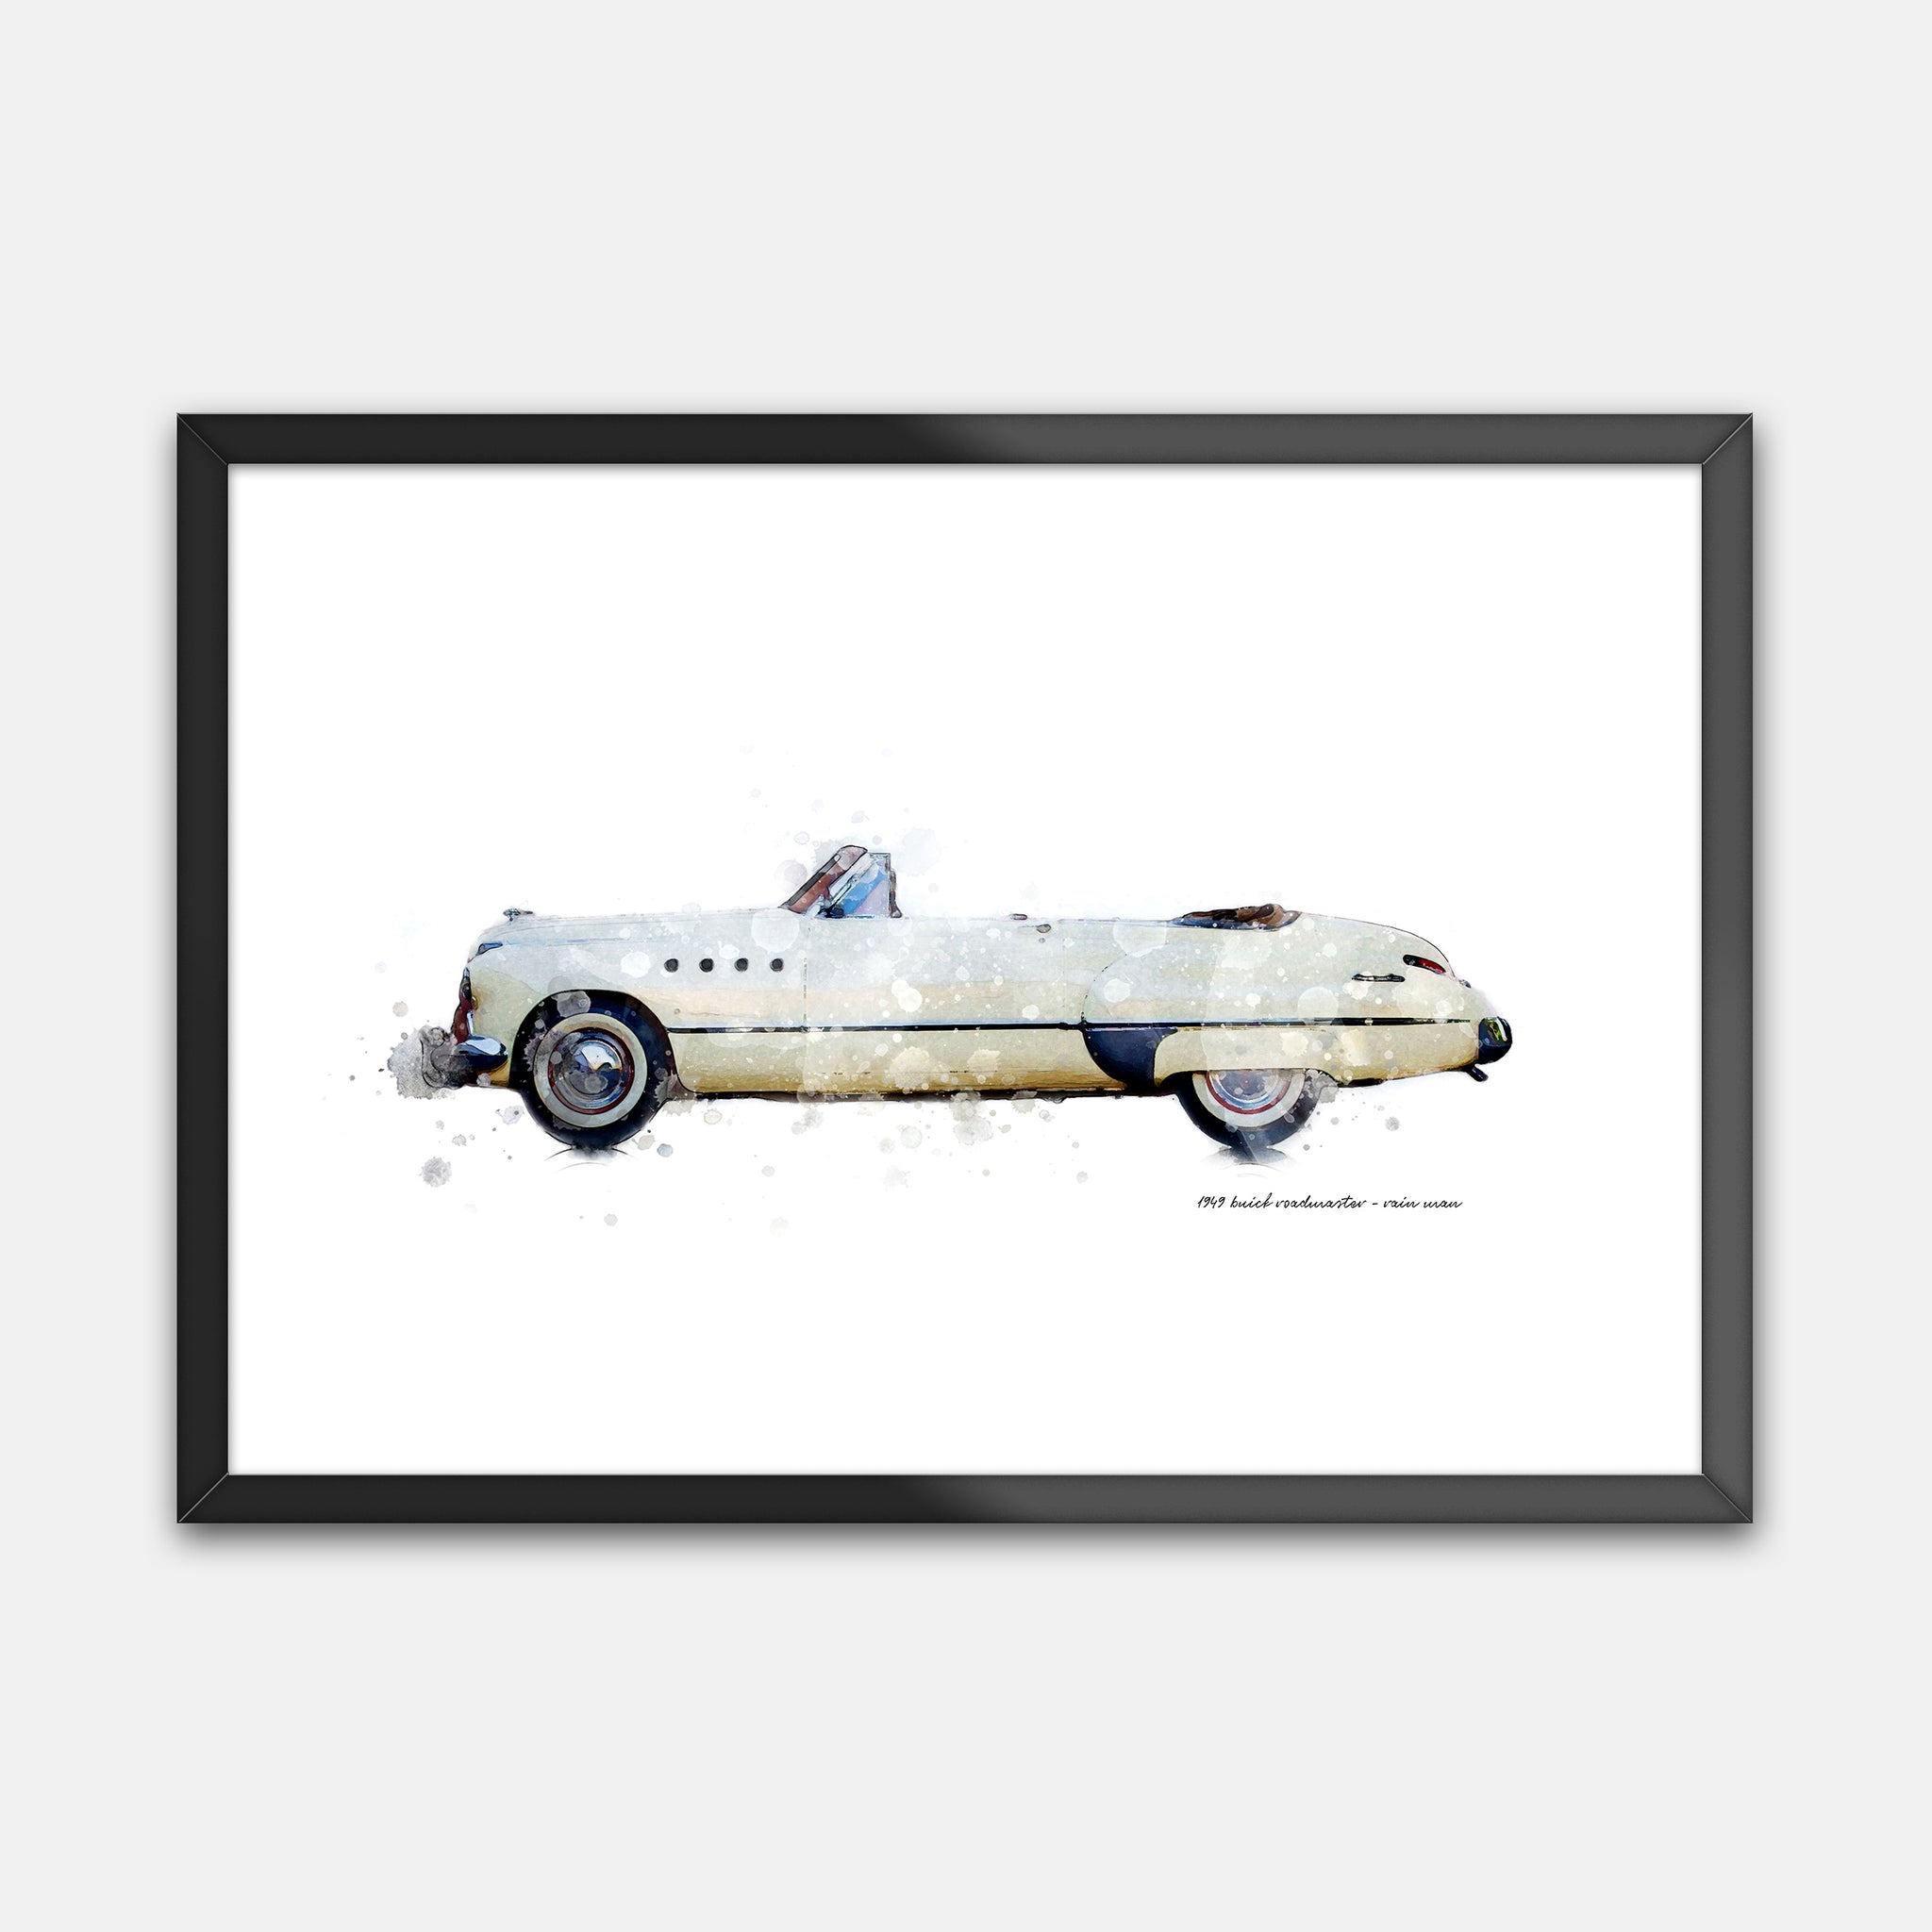 1949 Buick Roadmaster - "Rain Man"